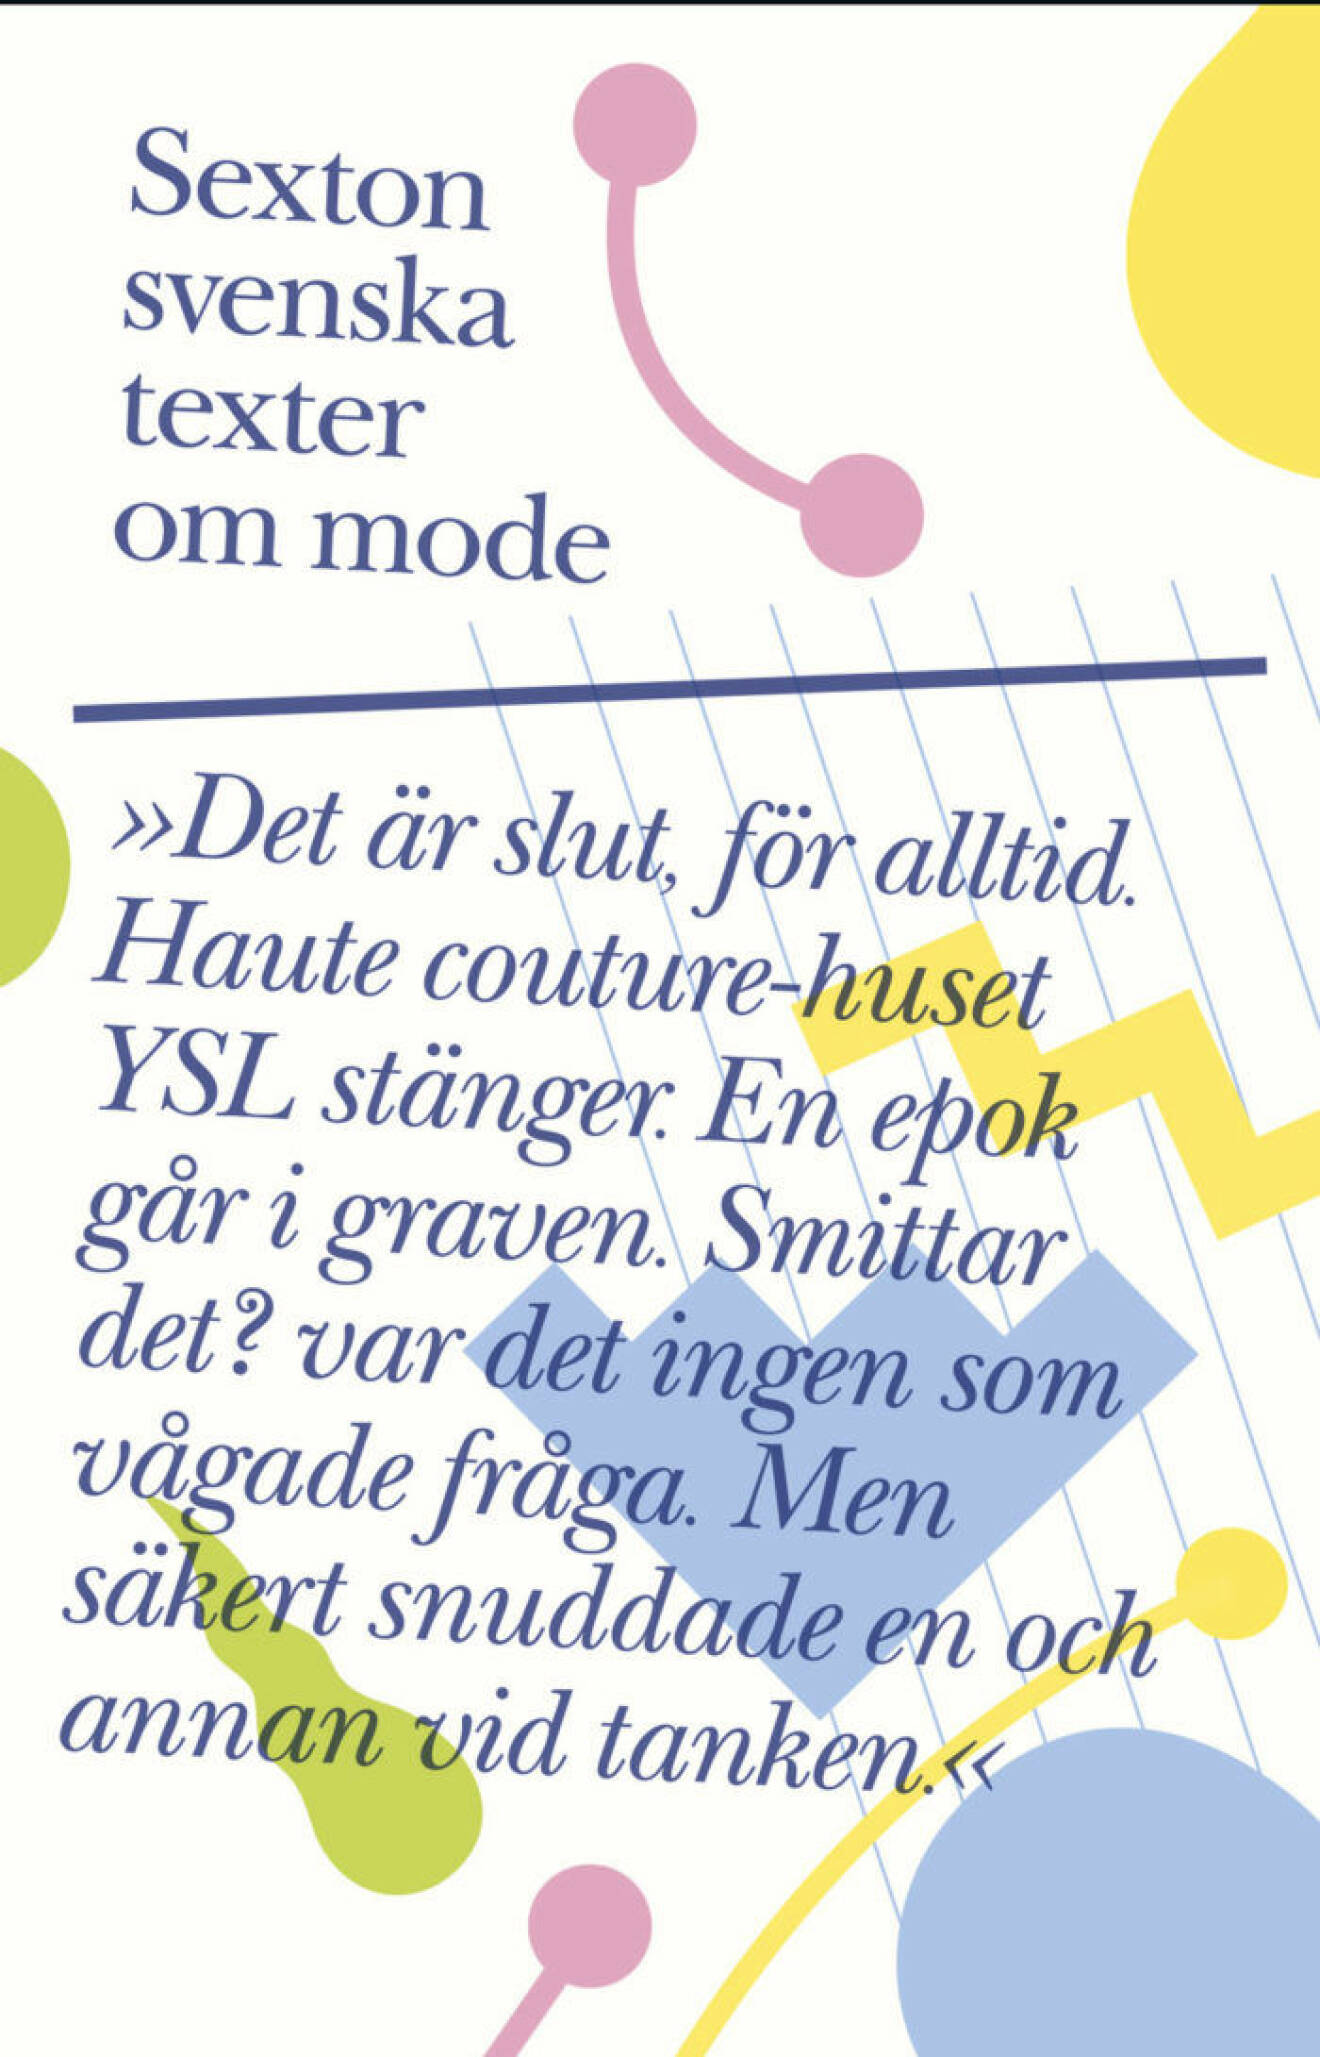 Sexton svenska texter om mode (Pocky)